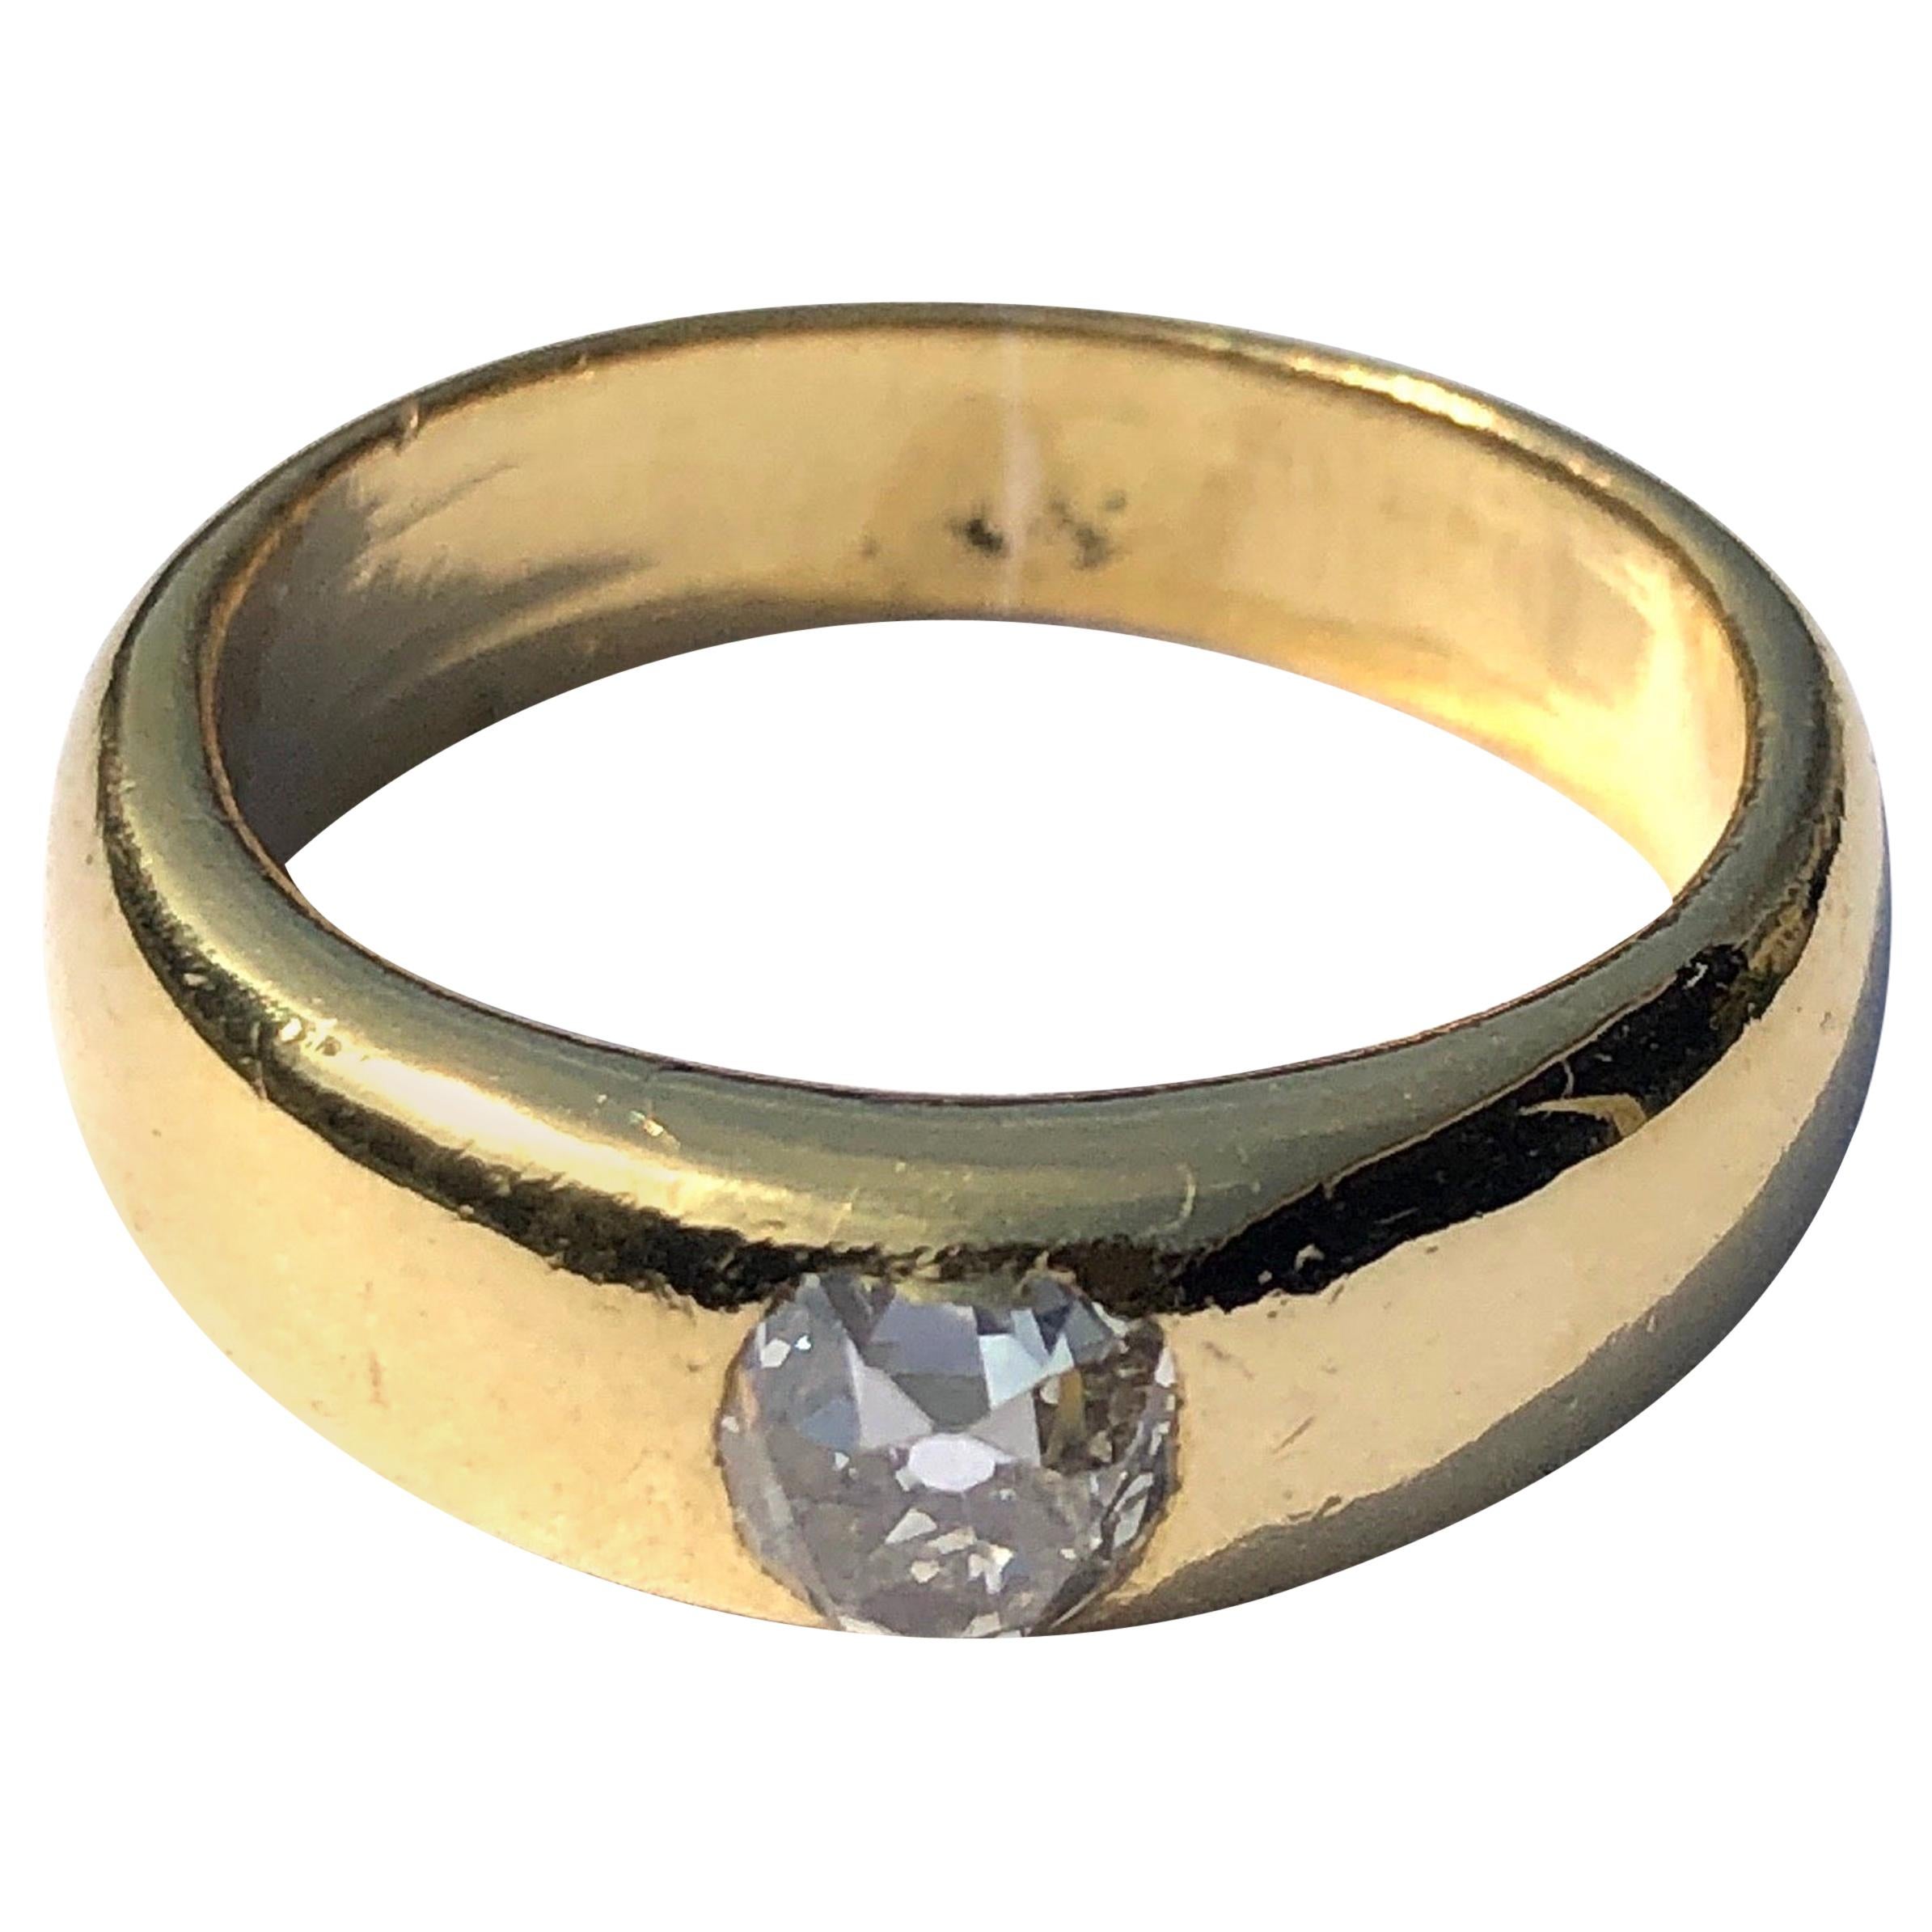 Edwardian Diamond and 18 Carat Gold Gypsy Ring